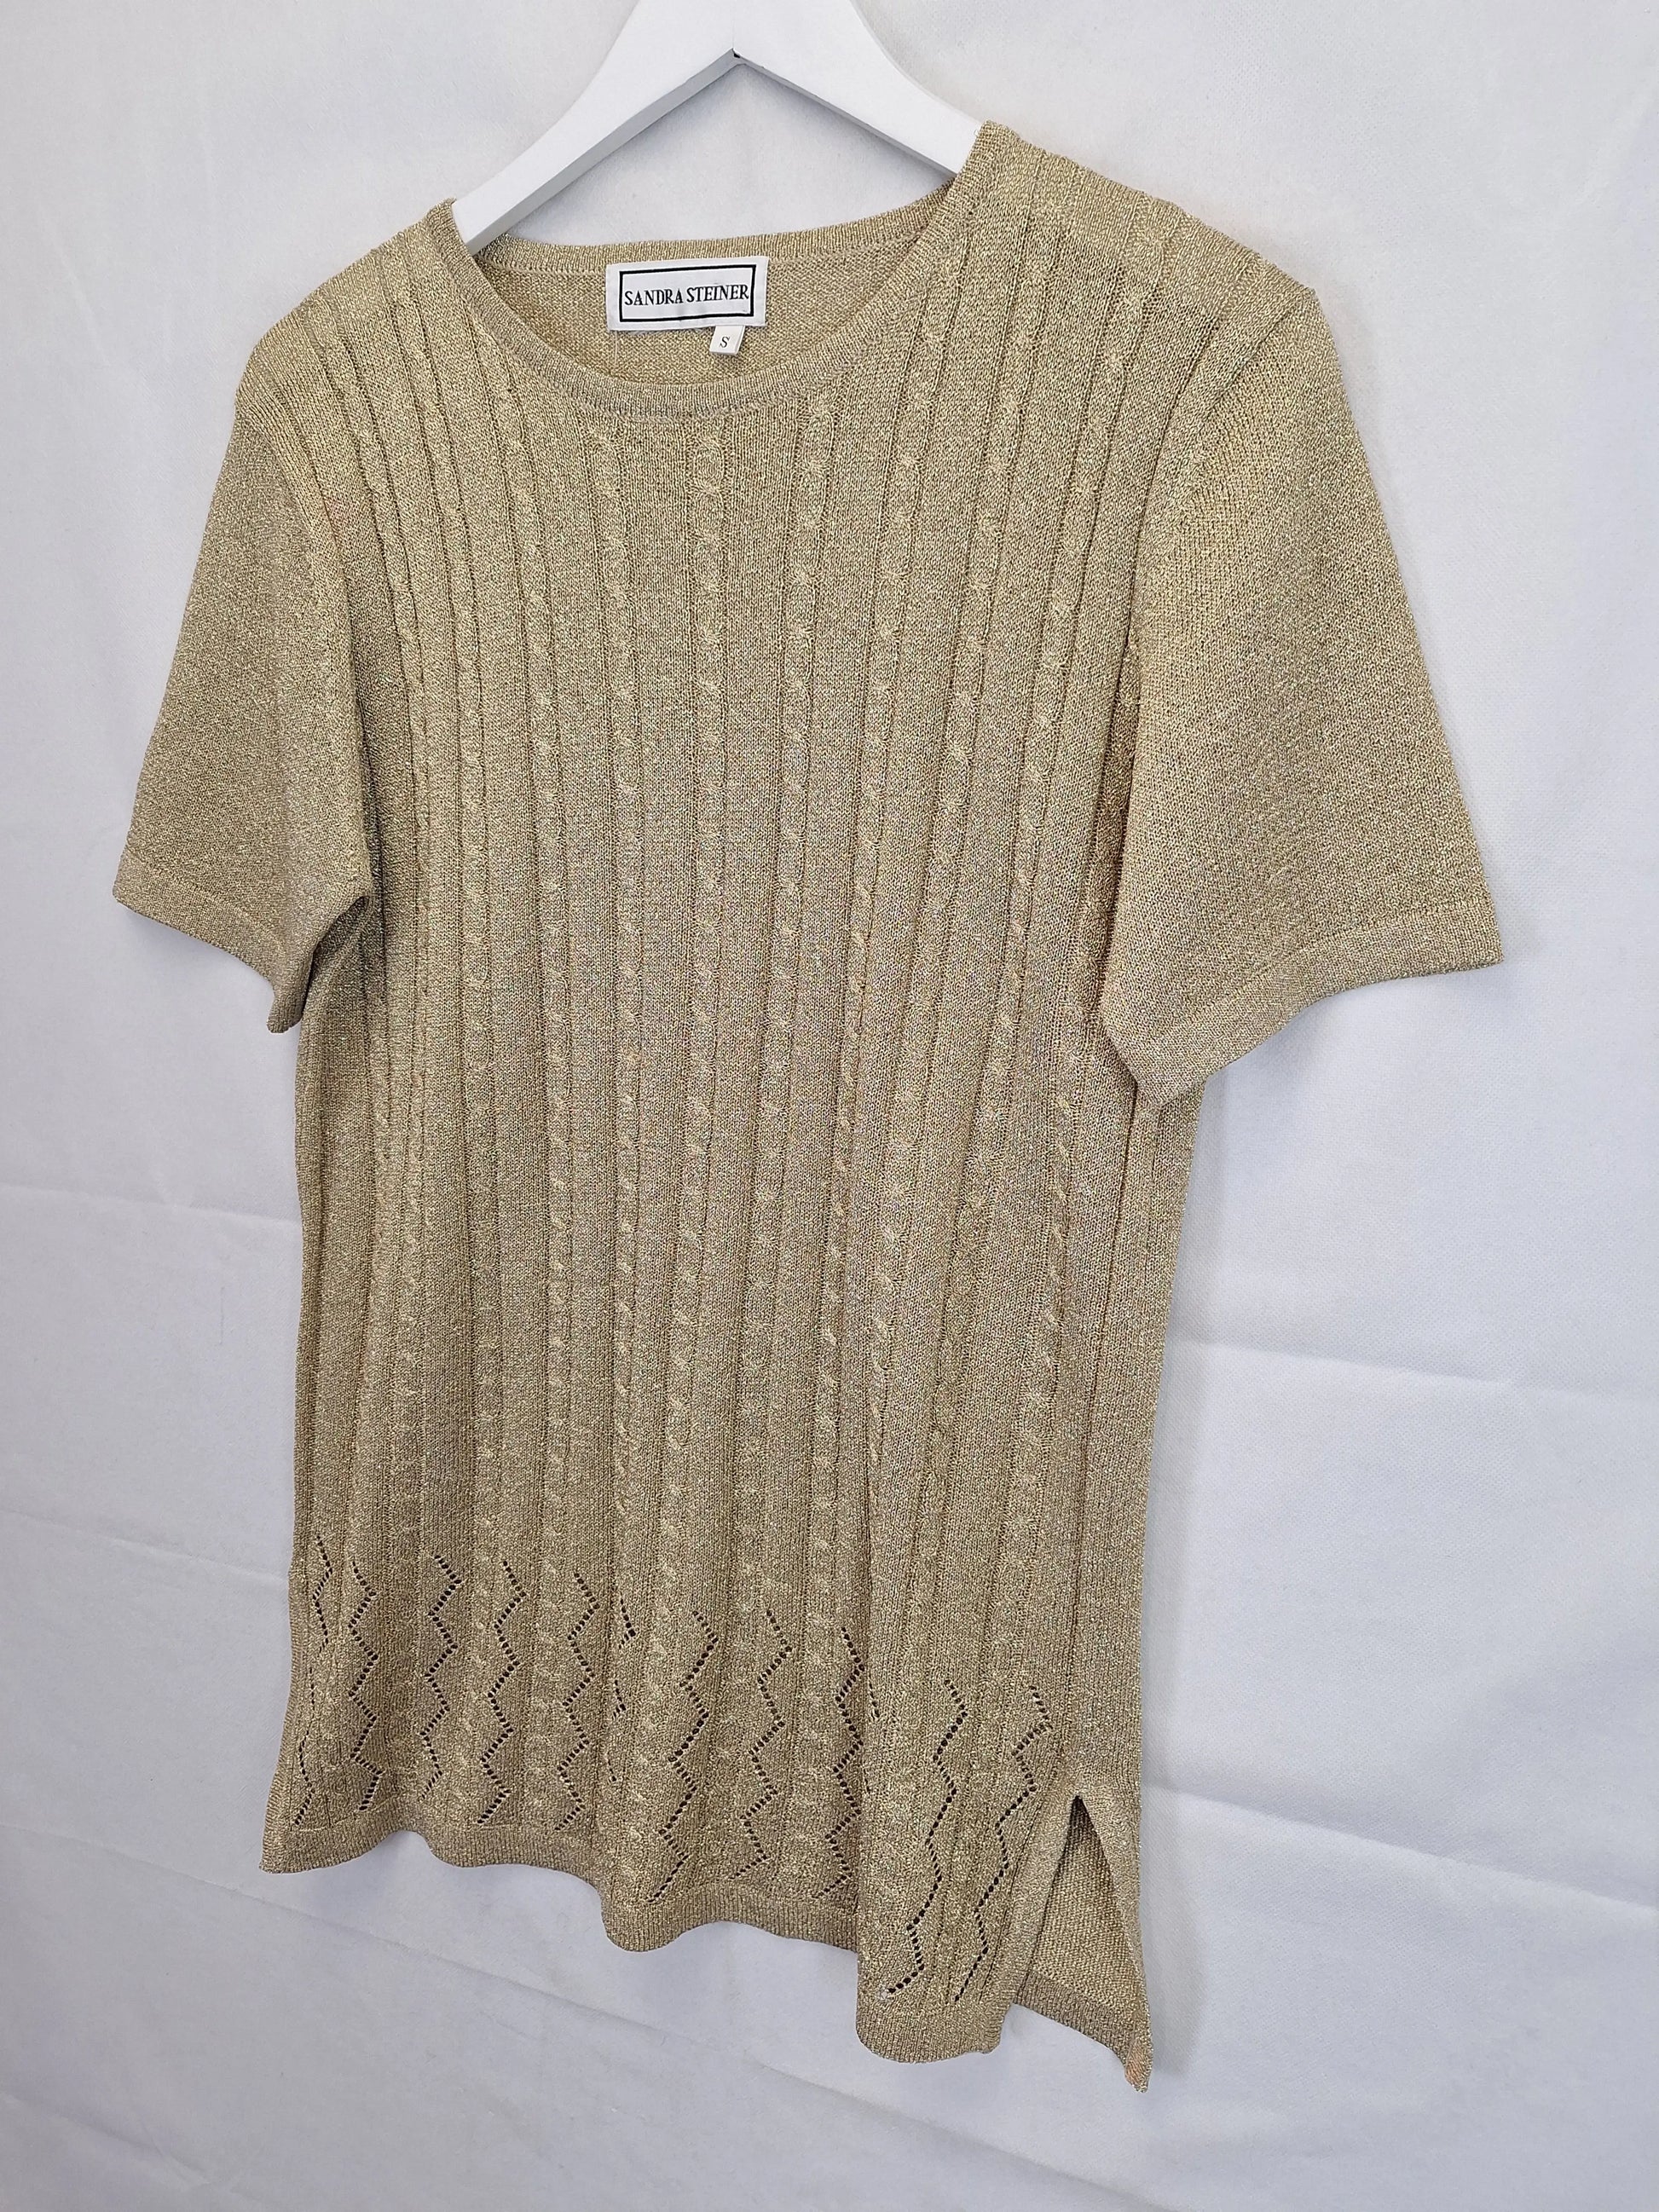 Sandra Steiner Gold Metallic Knit Top Size S by SwapUp-Online Second Hand Store-Online Thrift Store